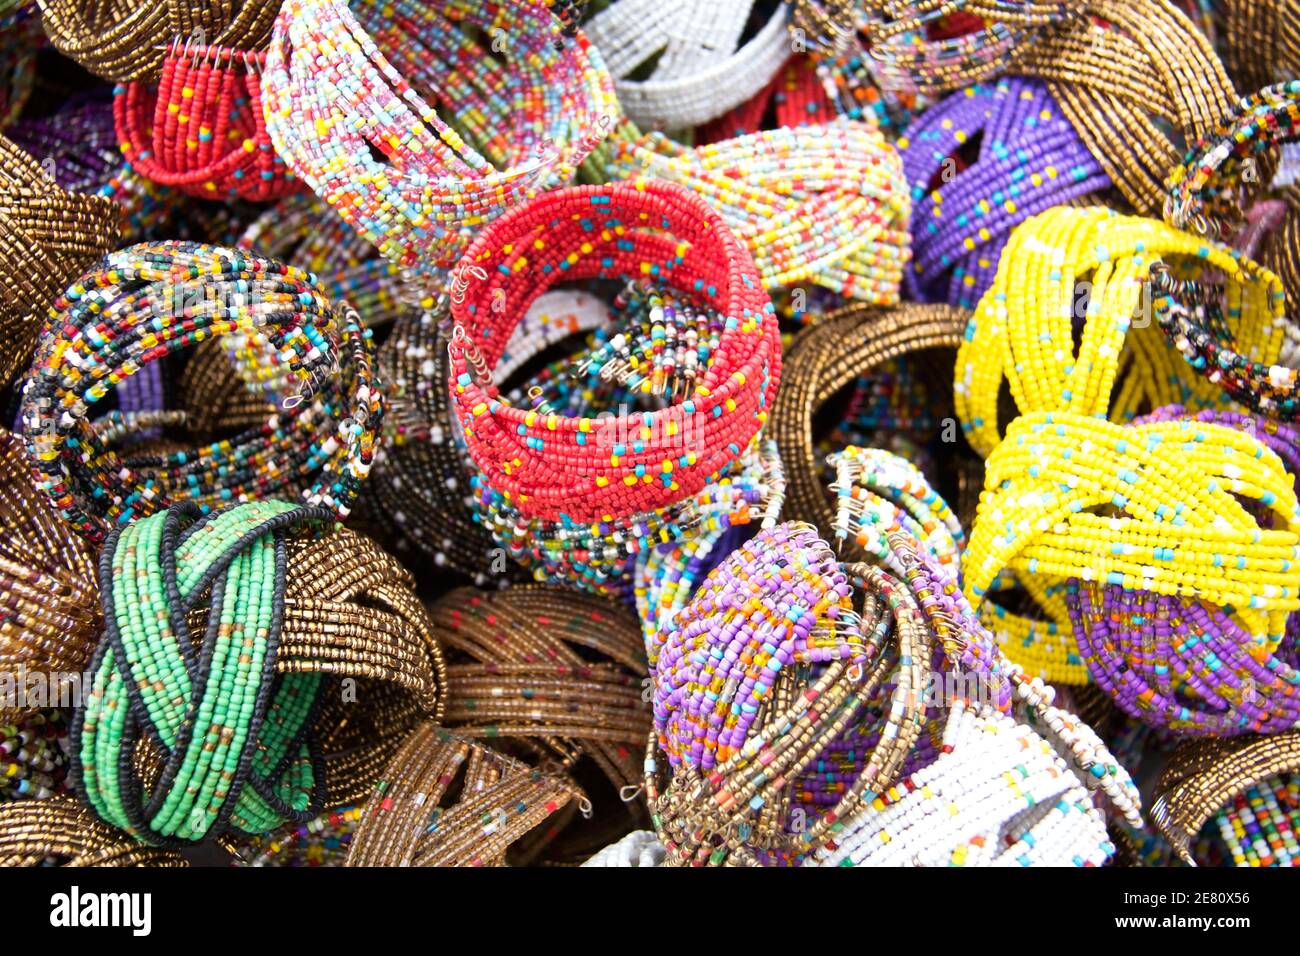 Street market - Souvenirs, Bracelets Stock Photo